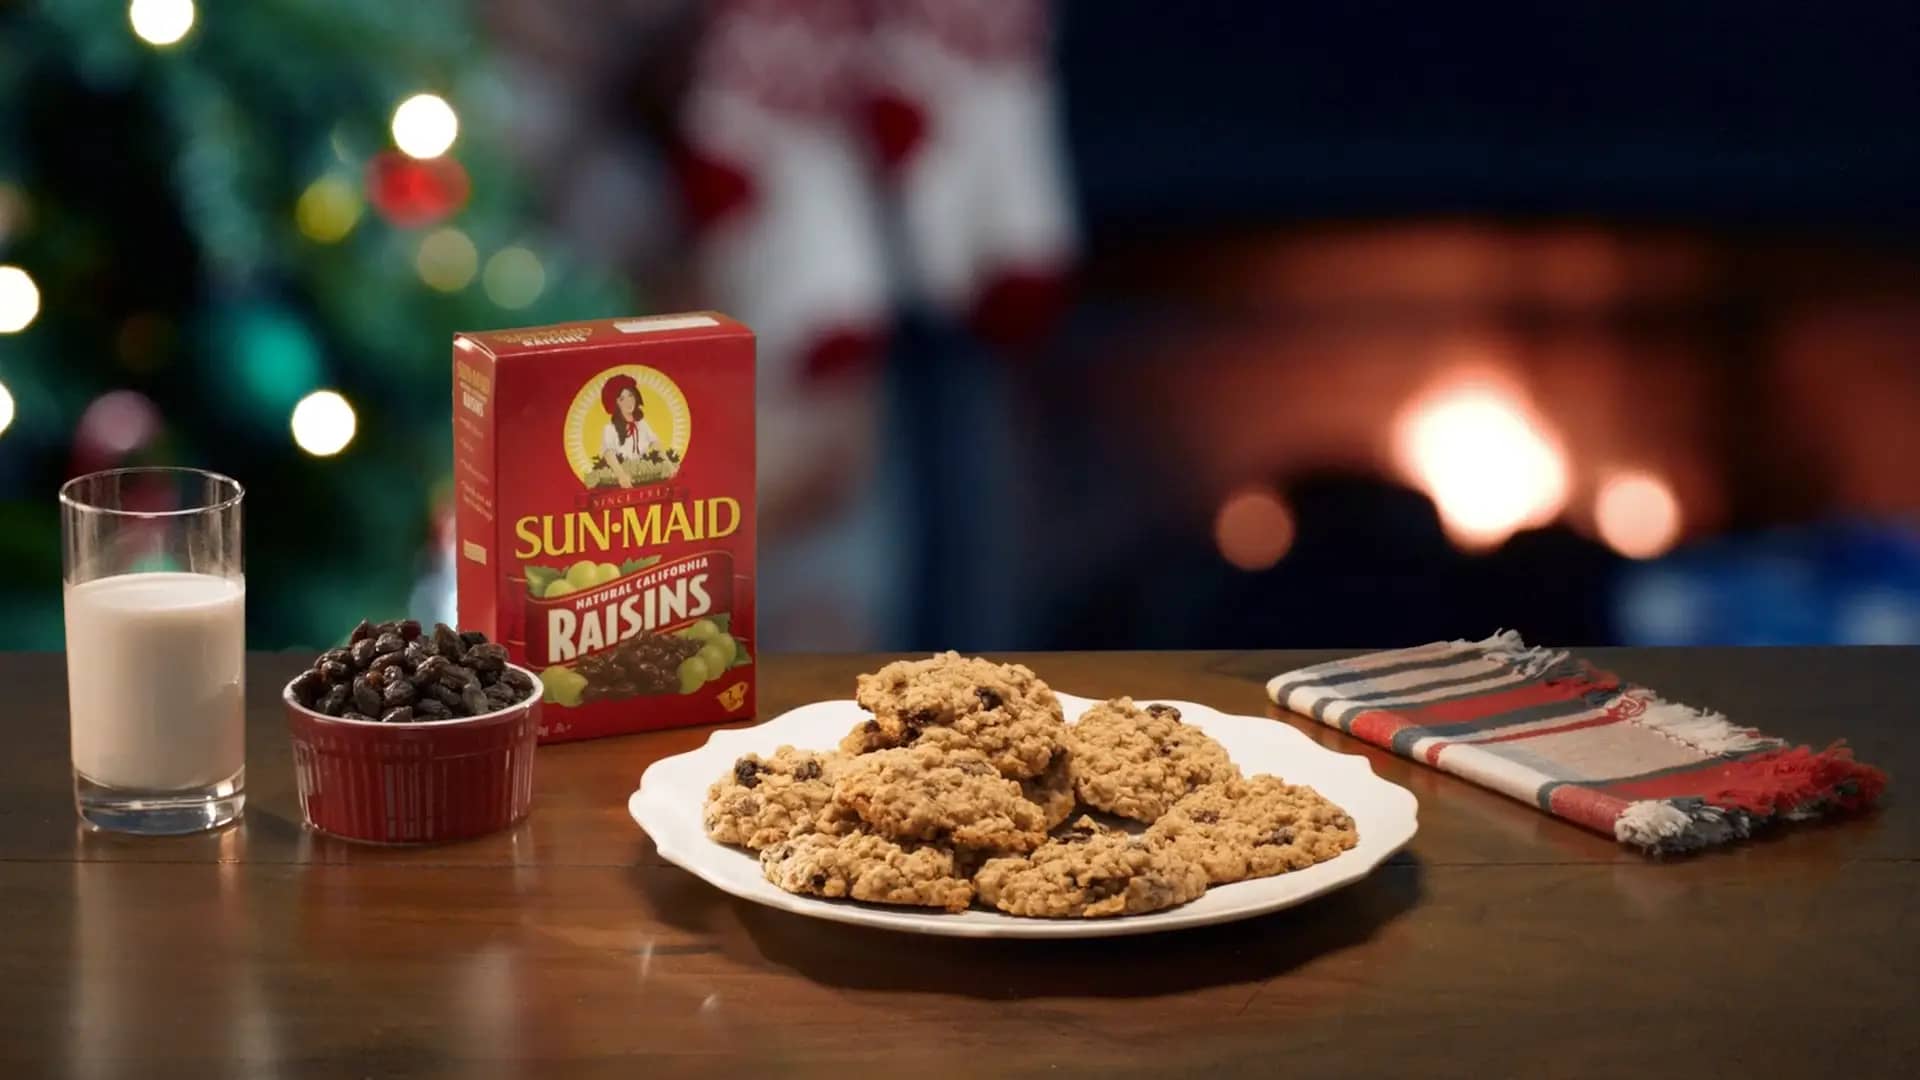 Sun-maid Raisins: “Bake It For Santa”, Winter Spots.